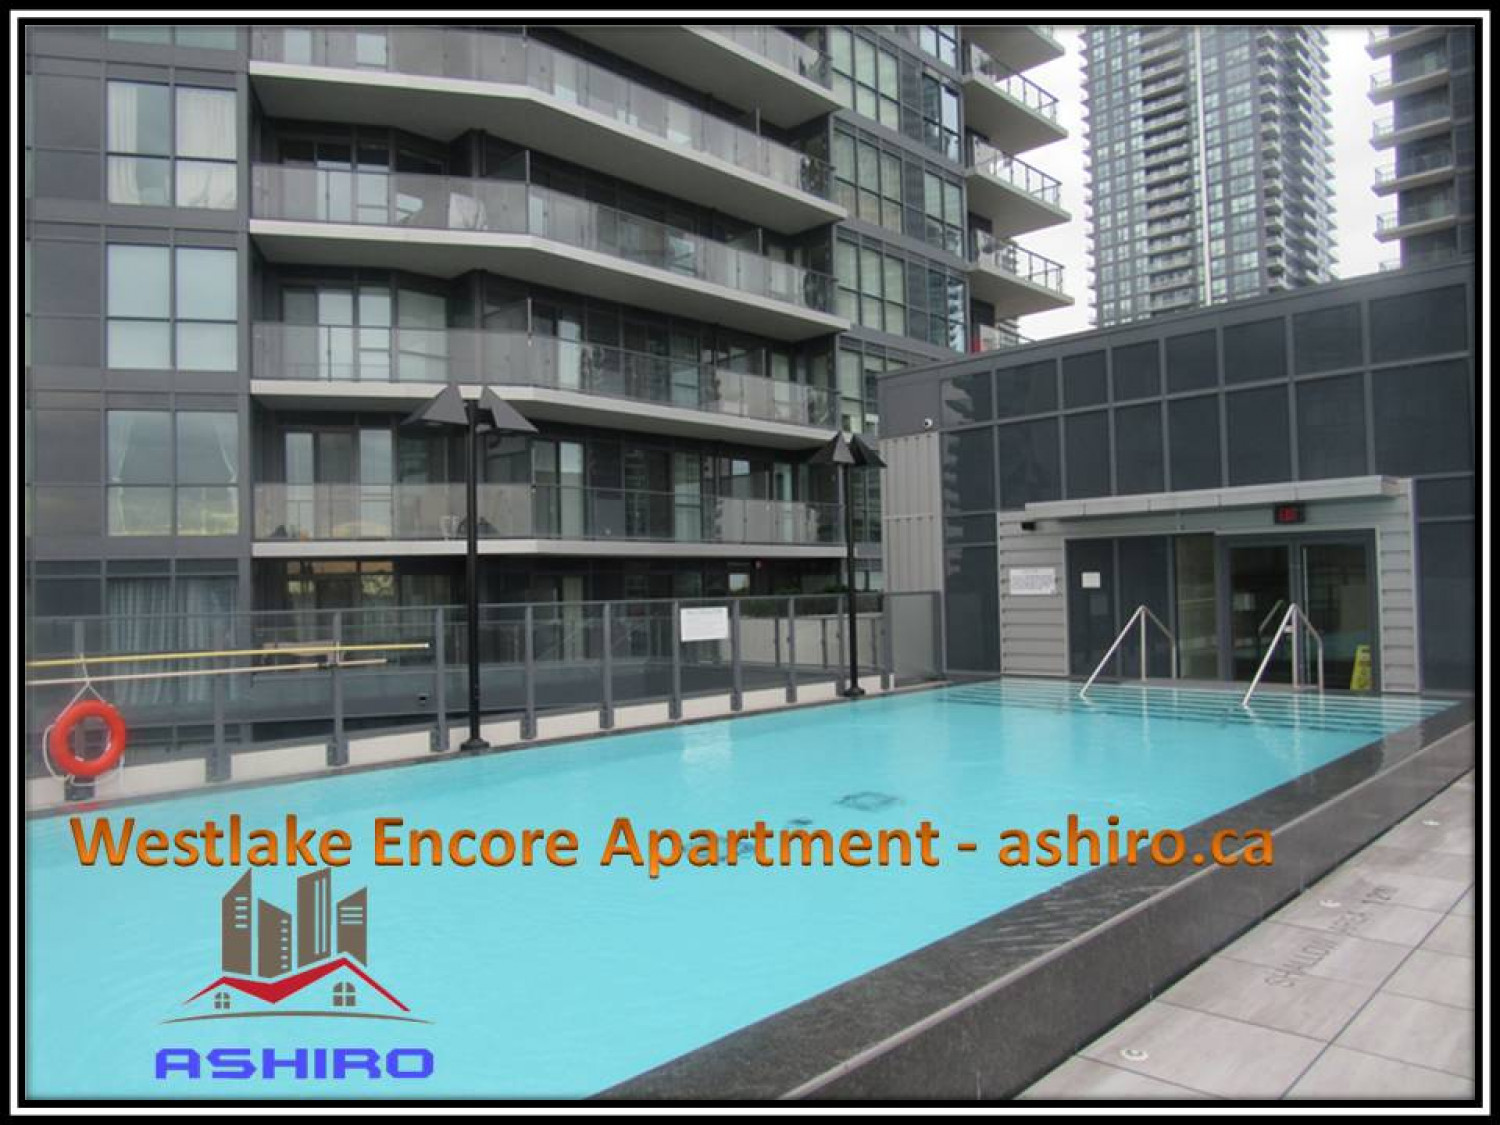 Westlake Encore Apartment - ashiro.ca Infographic